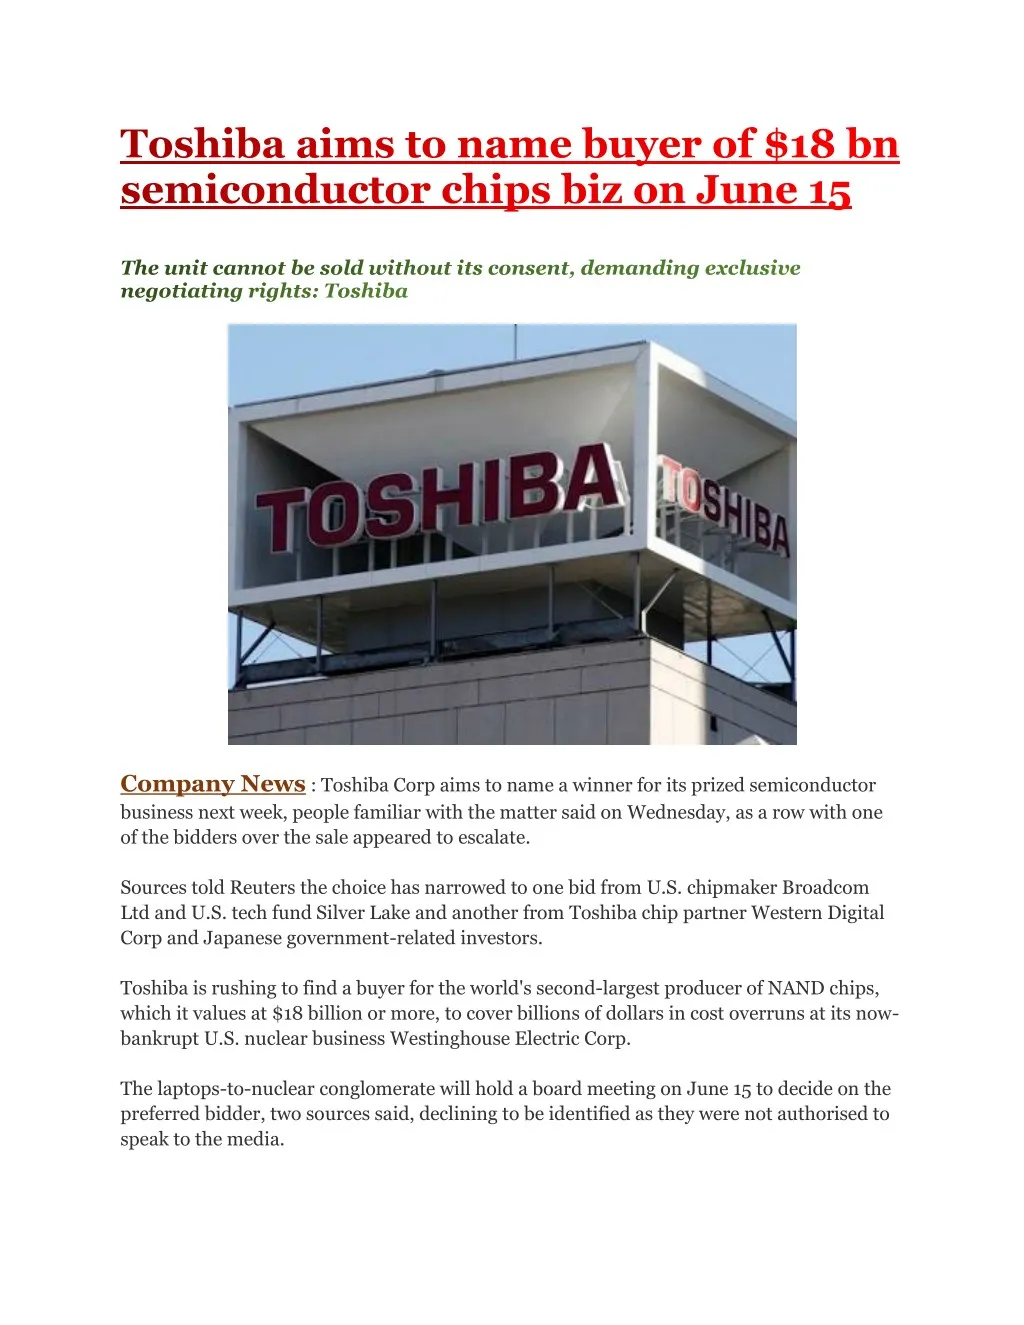 company news toshiba corp aims to name a winner